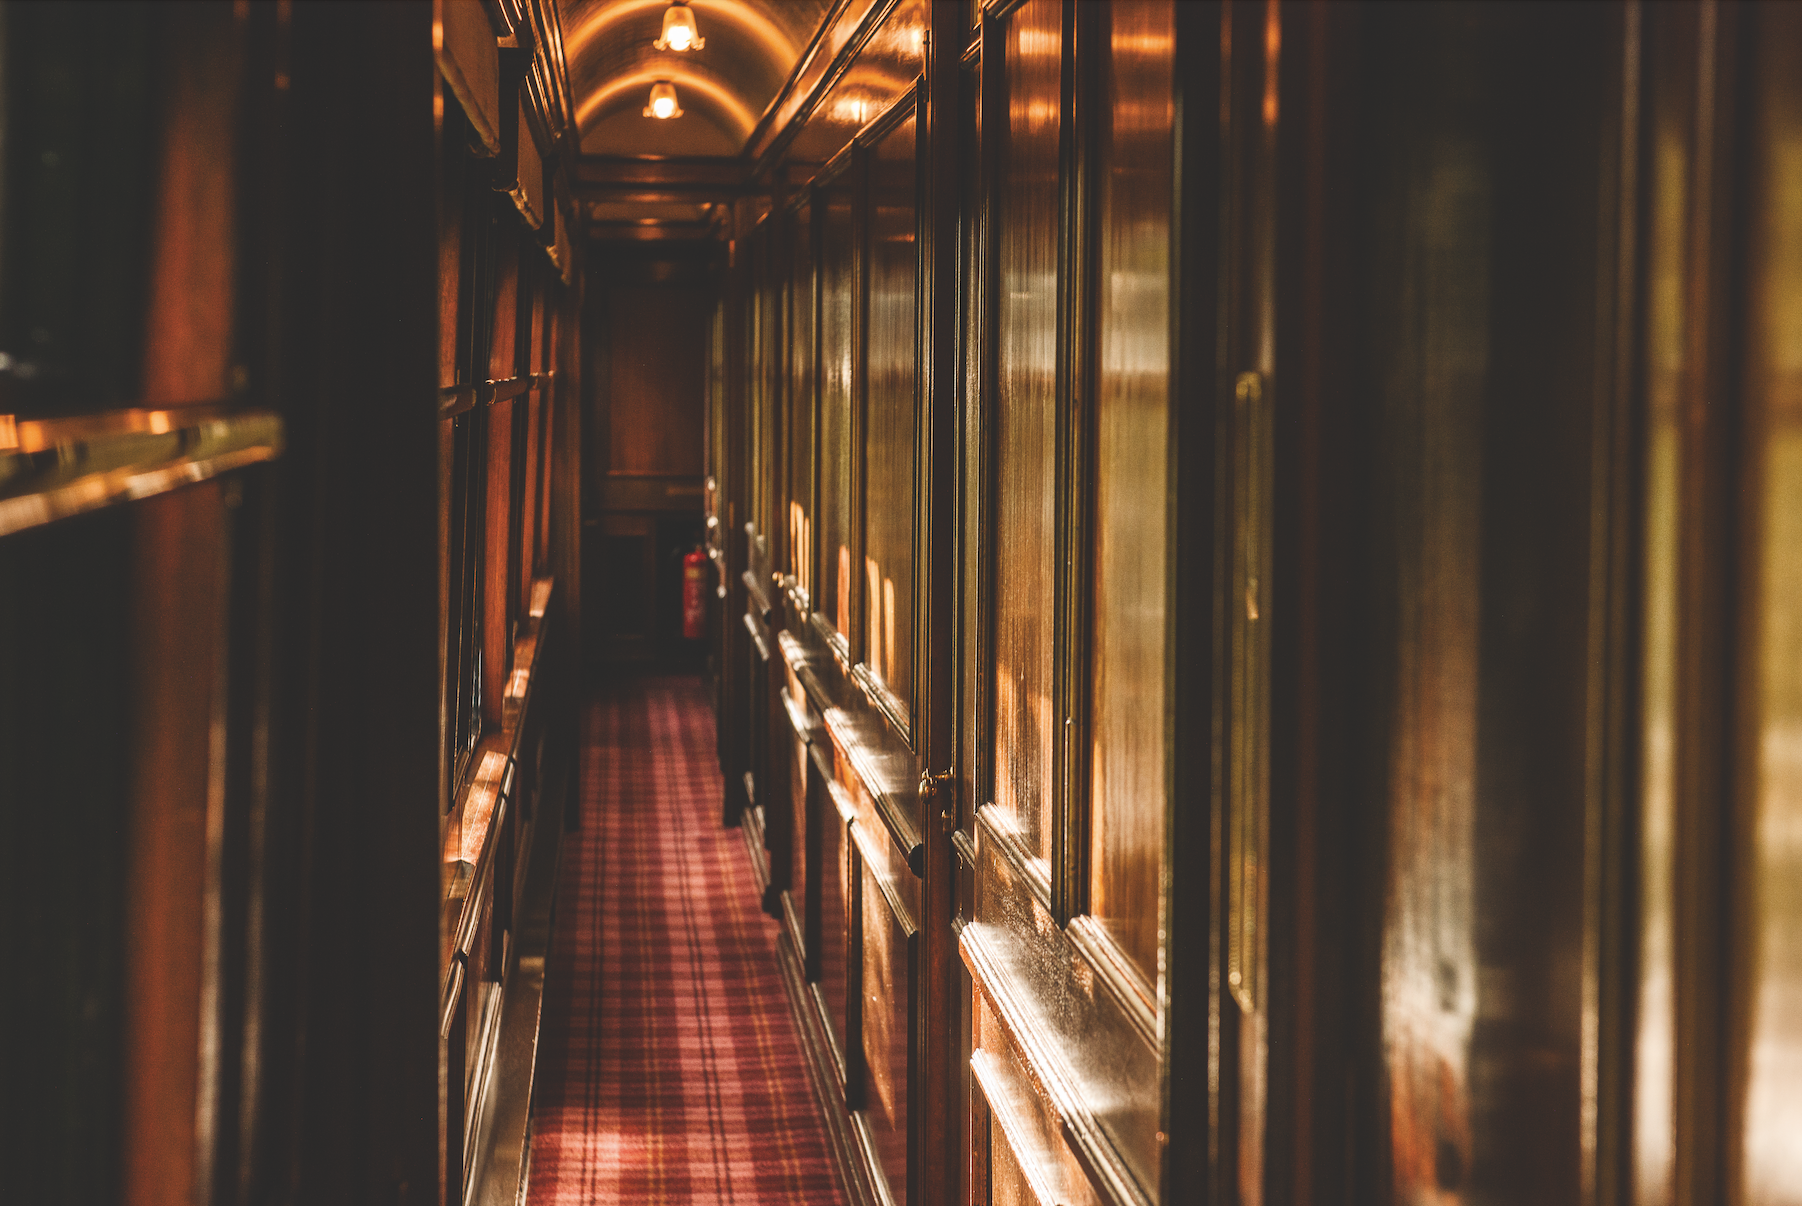   The iconic halls of the Belmond Royal Scotsman (photo credit: Belmond)  